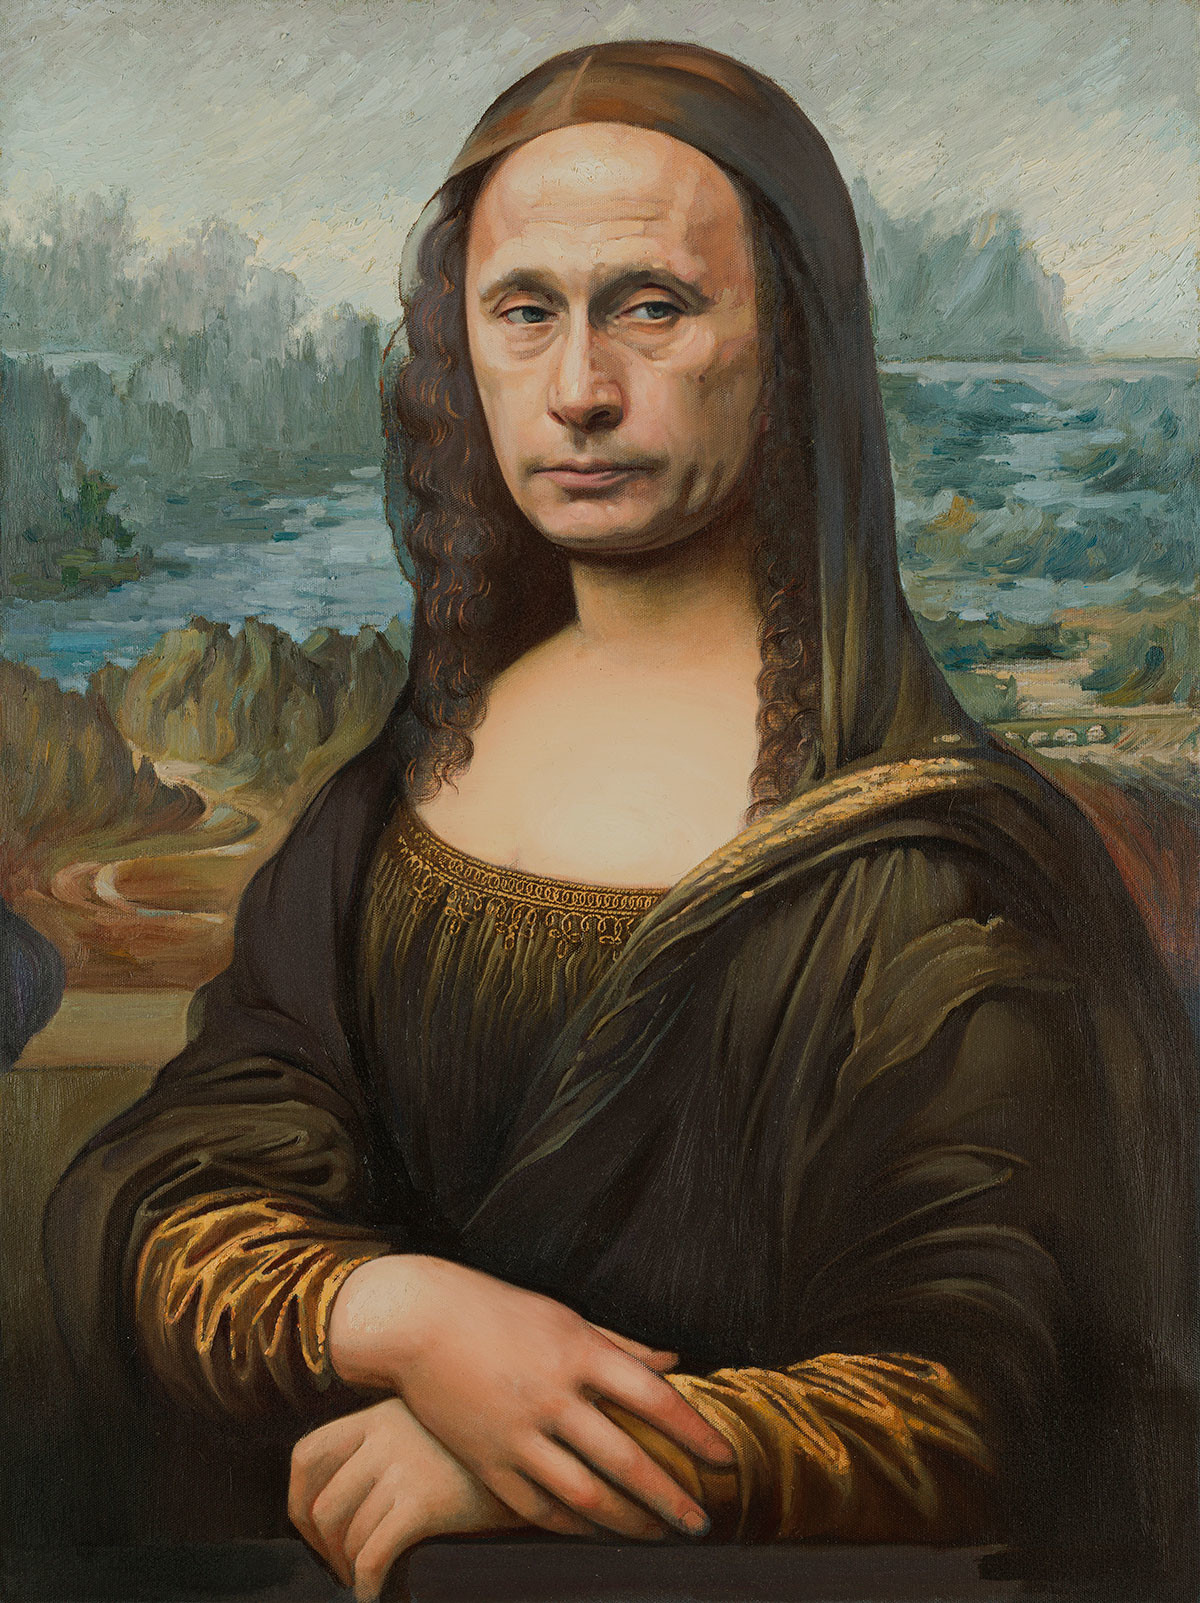 Alexánder Kosolapov. Mona Lisa, 2020

